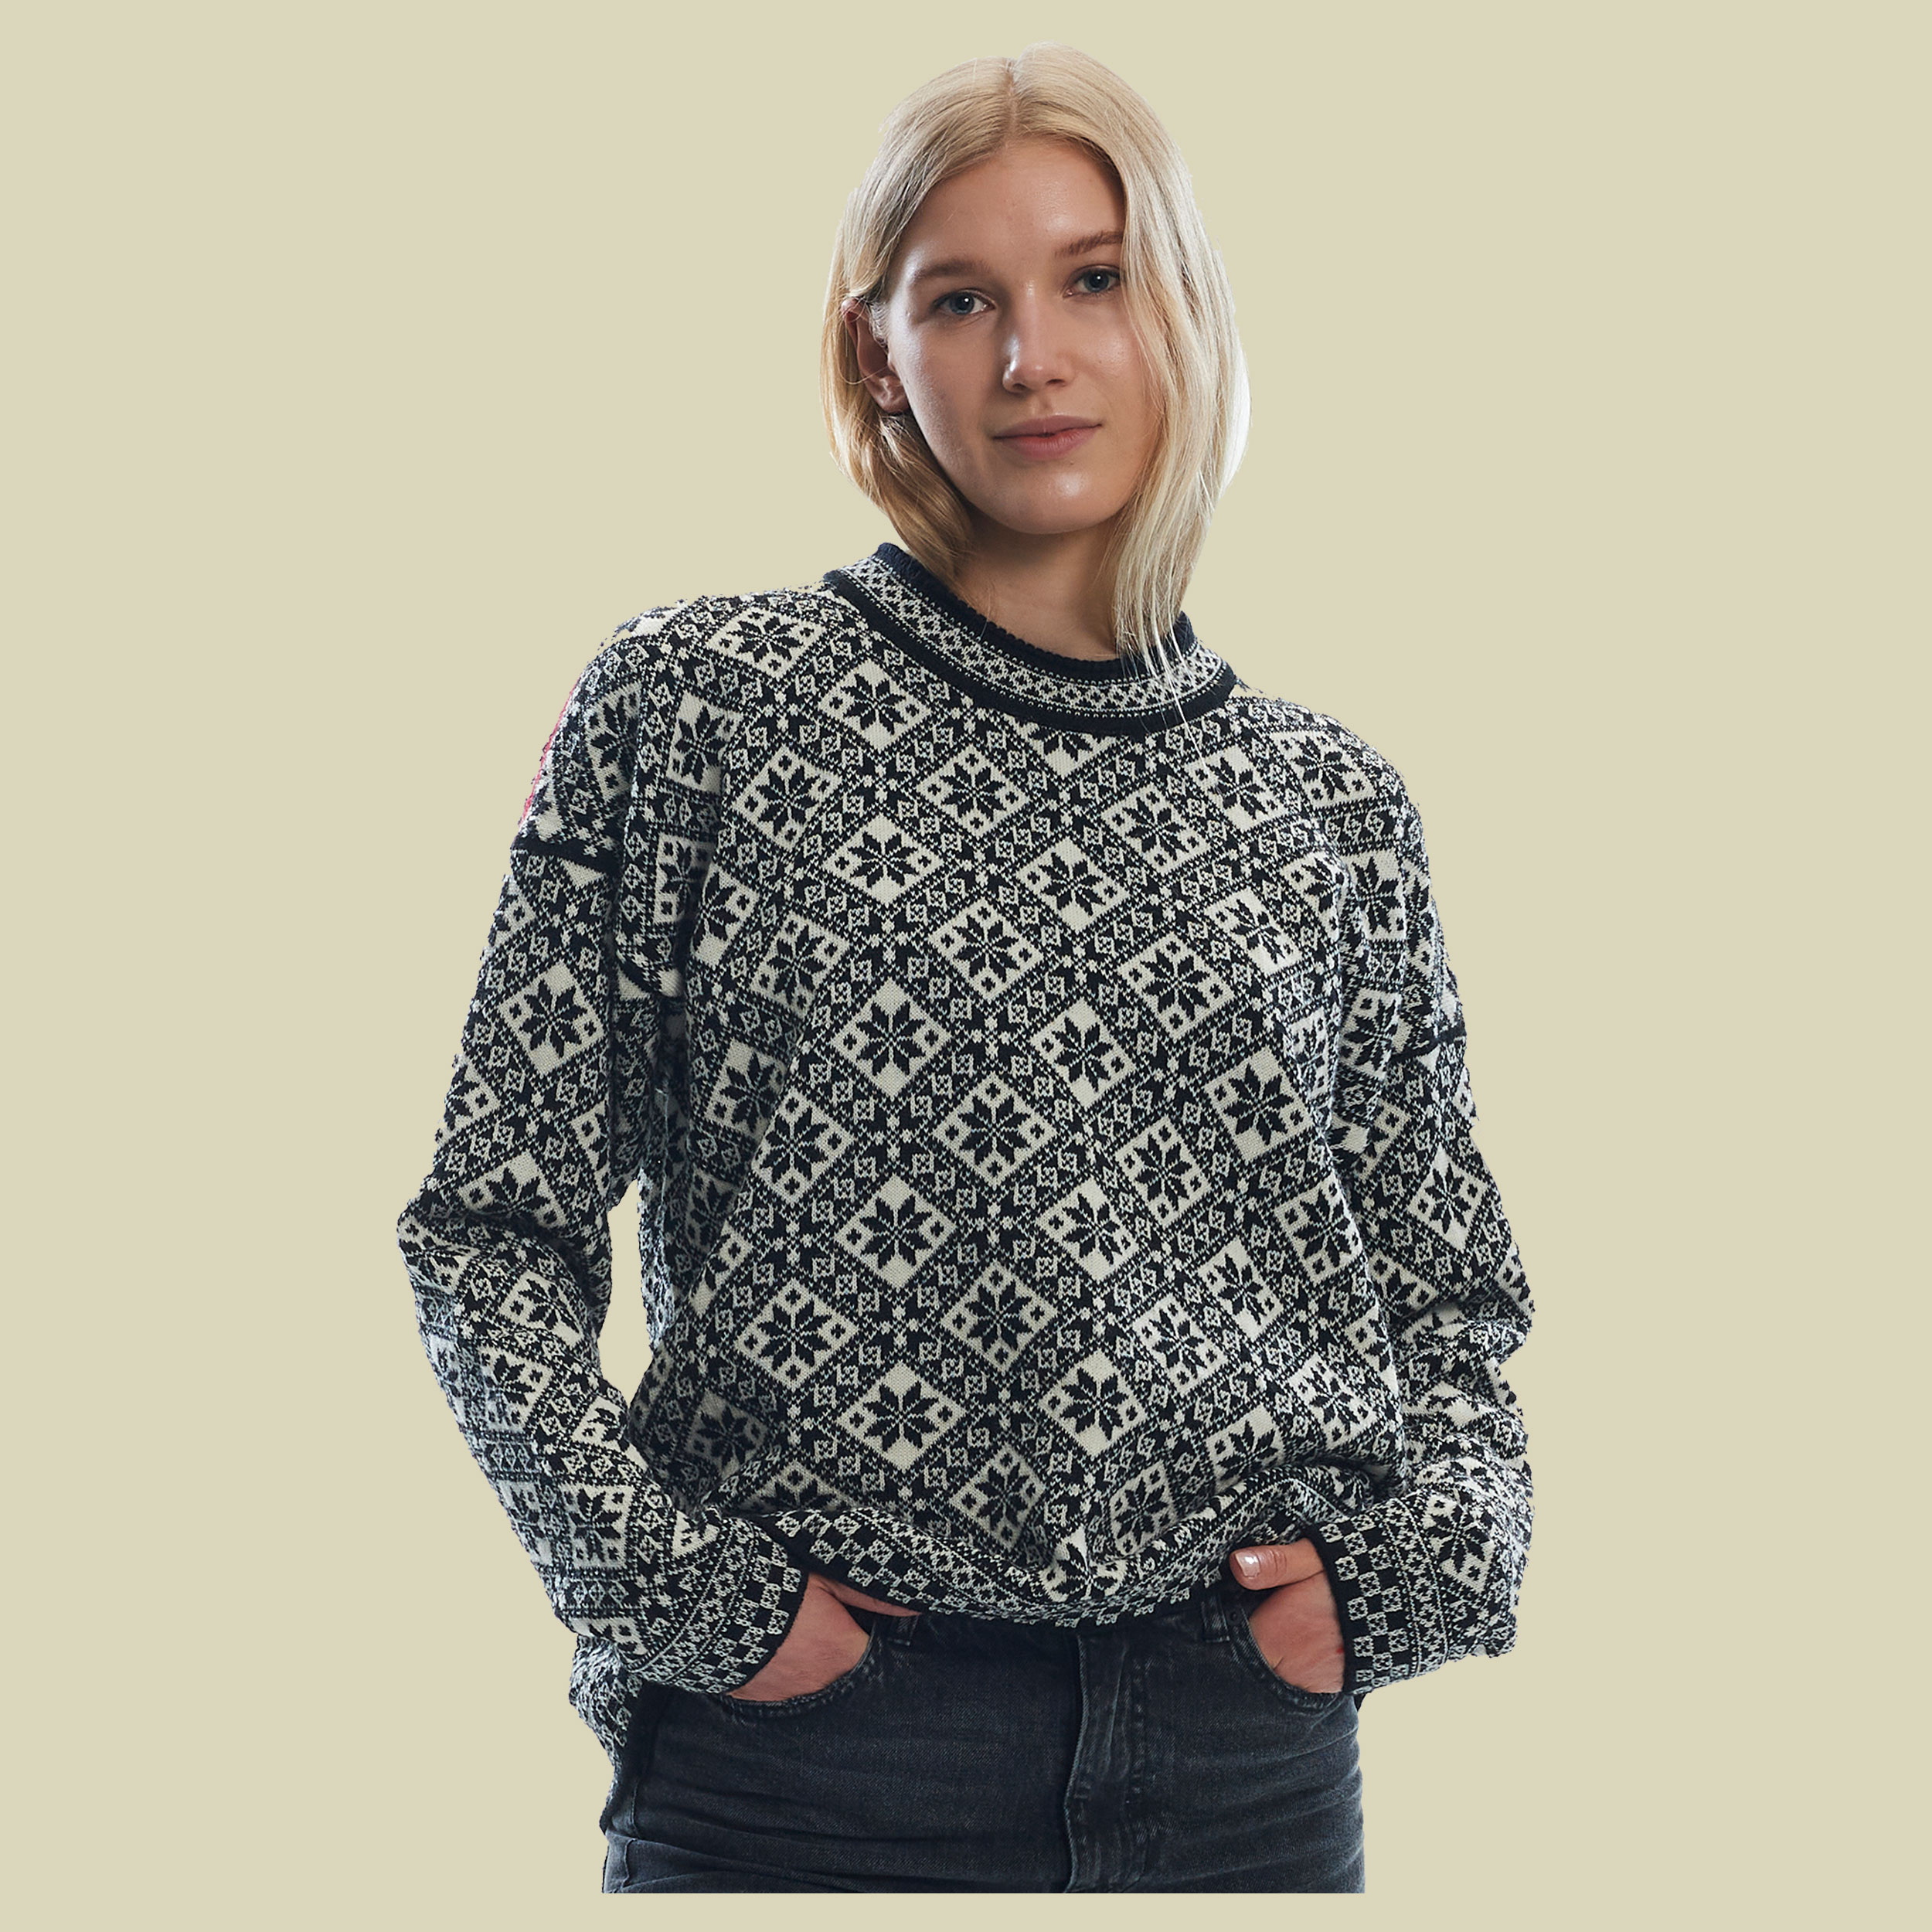 Bjoroy Sweater Women Größe S Farbe black/off white/raspberry